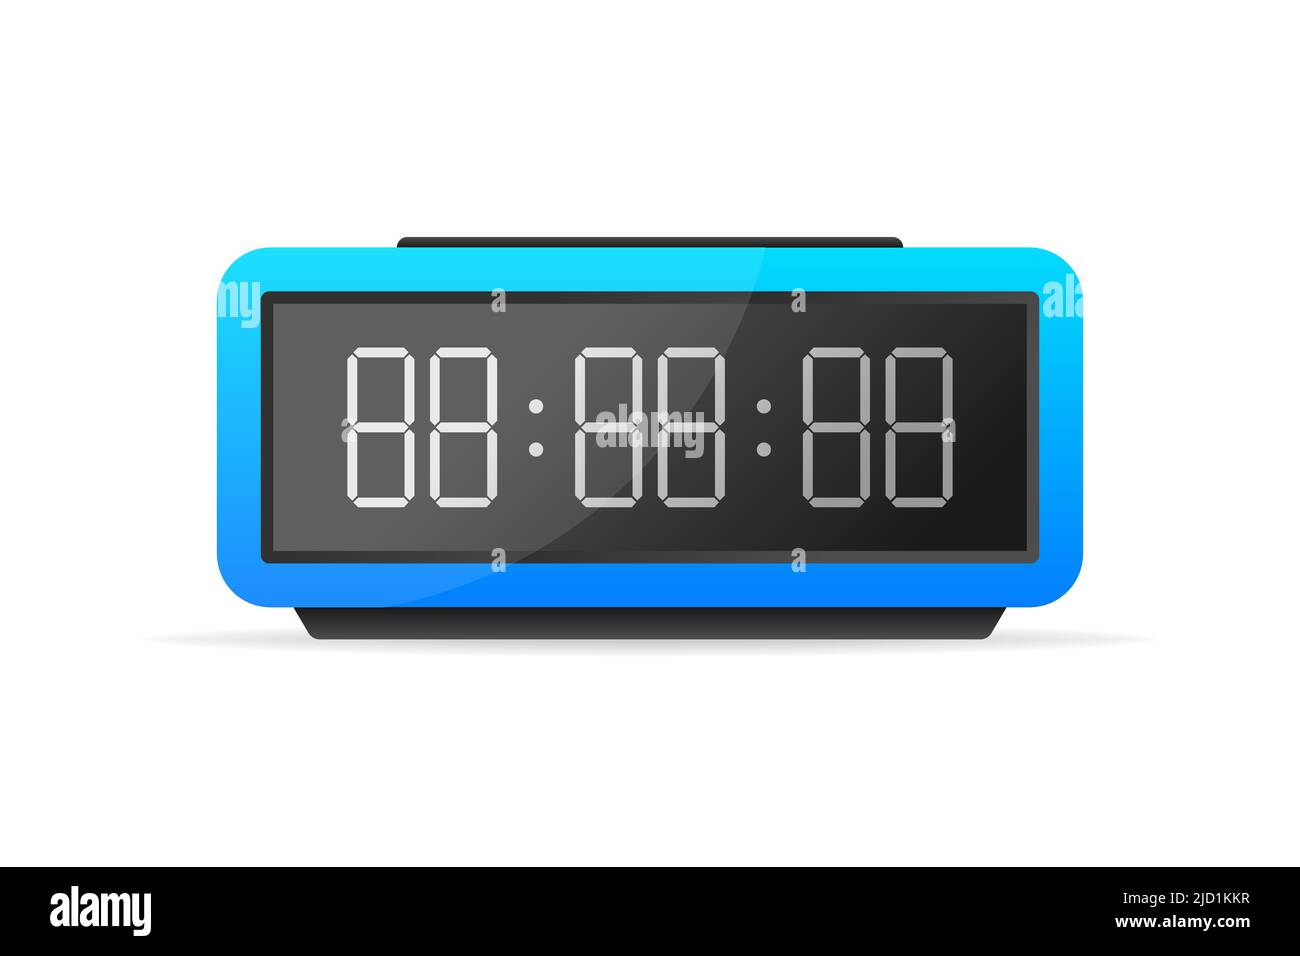 Flat digital clock illustration on white background. Phone icon set. Flat vector illustration Stock Vector